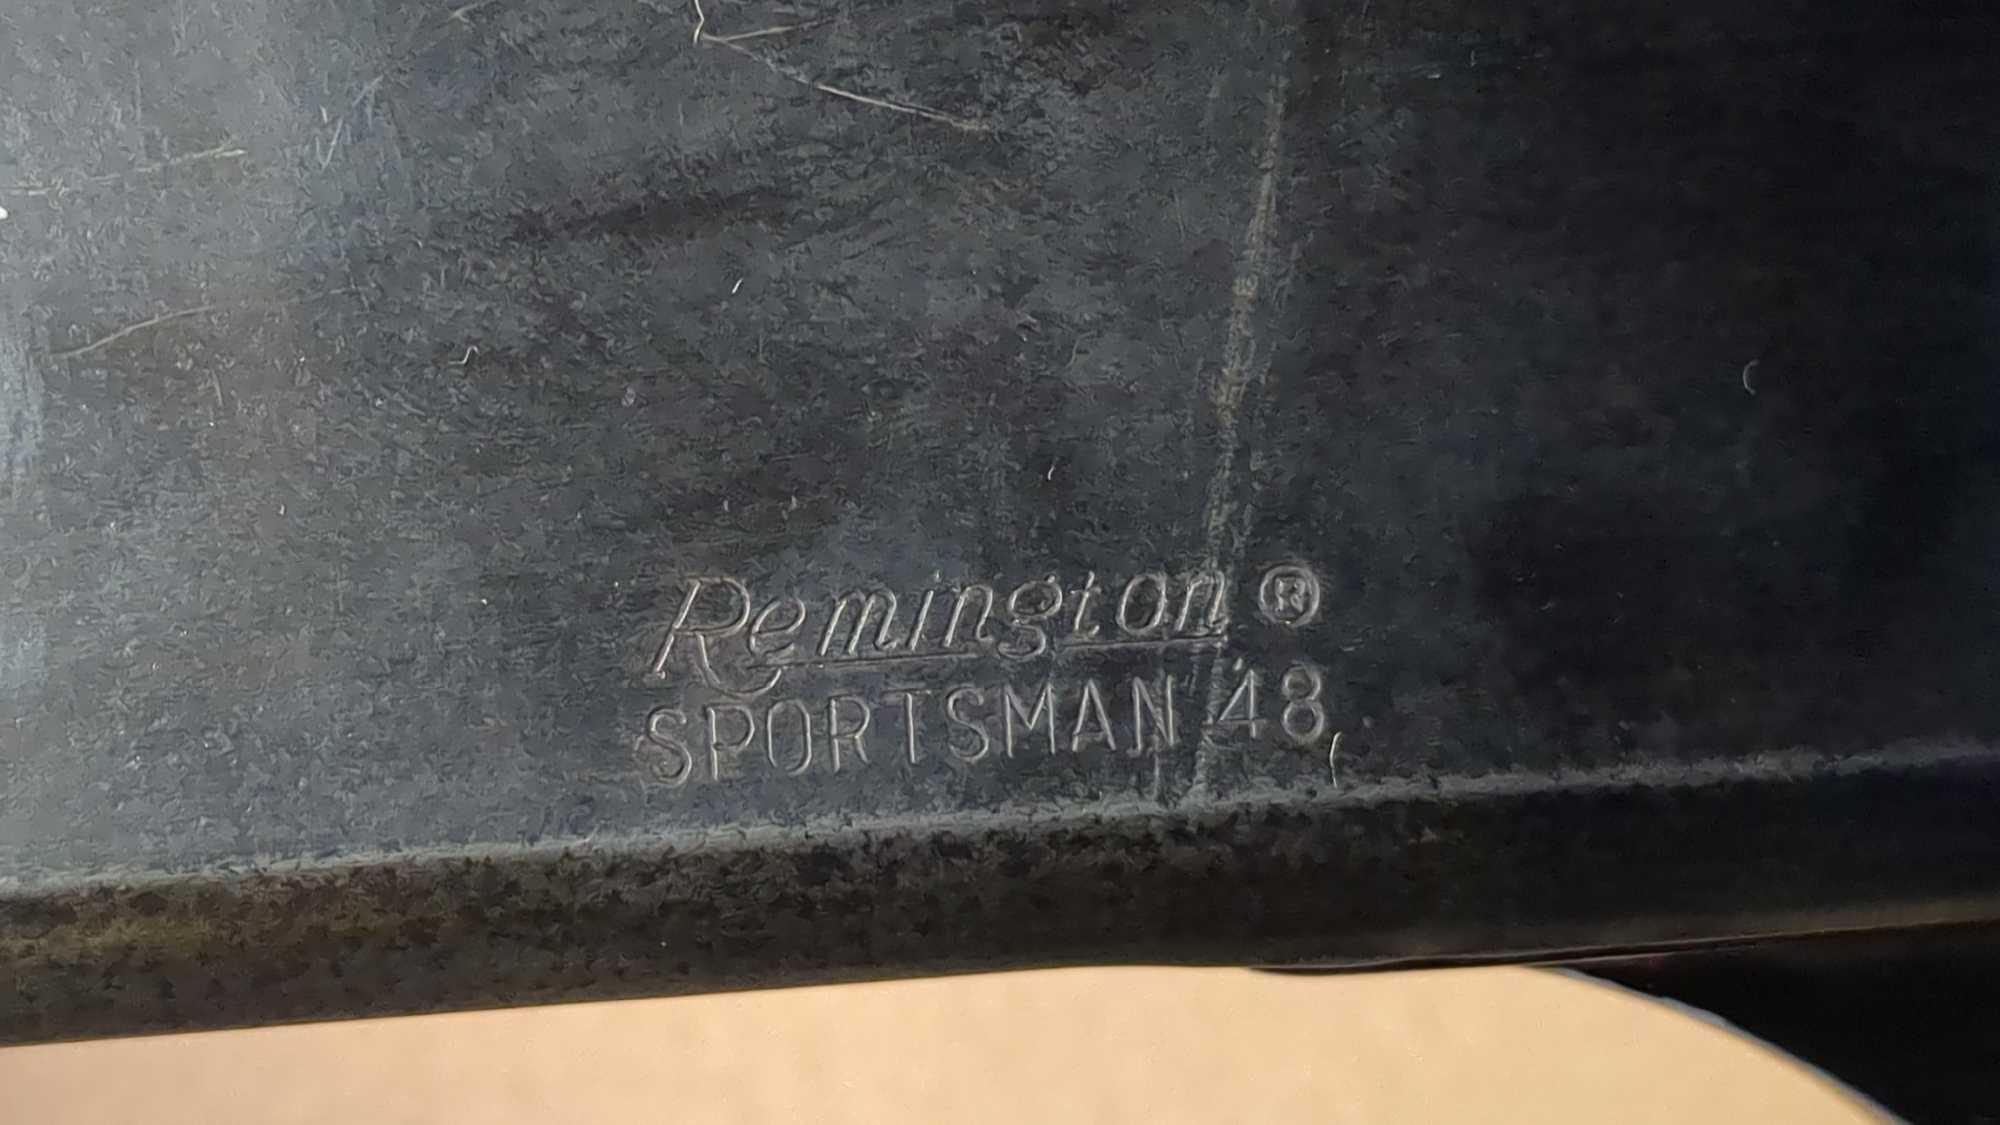 REMINGTON SPORTSMAN MODEL 48 2 3/4" 12-GAUGE SEMI-AUTO SHOTGUN